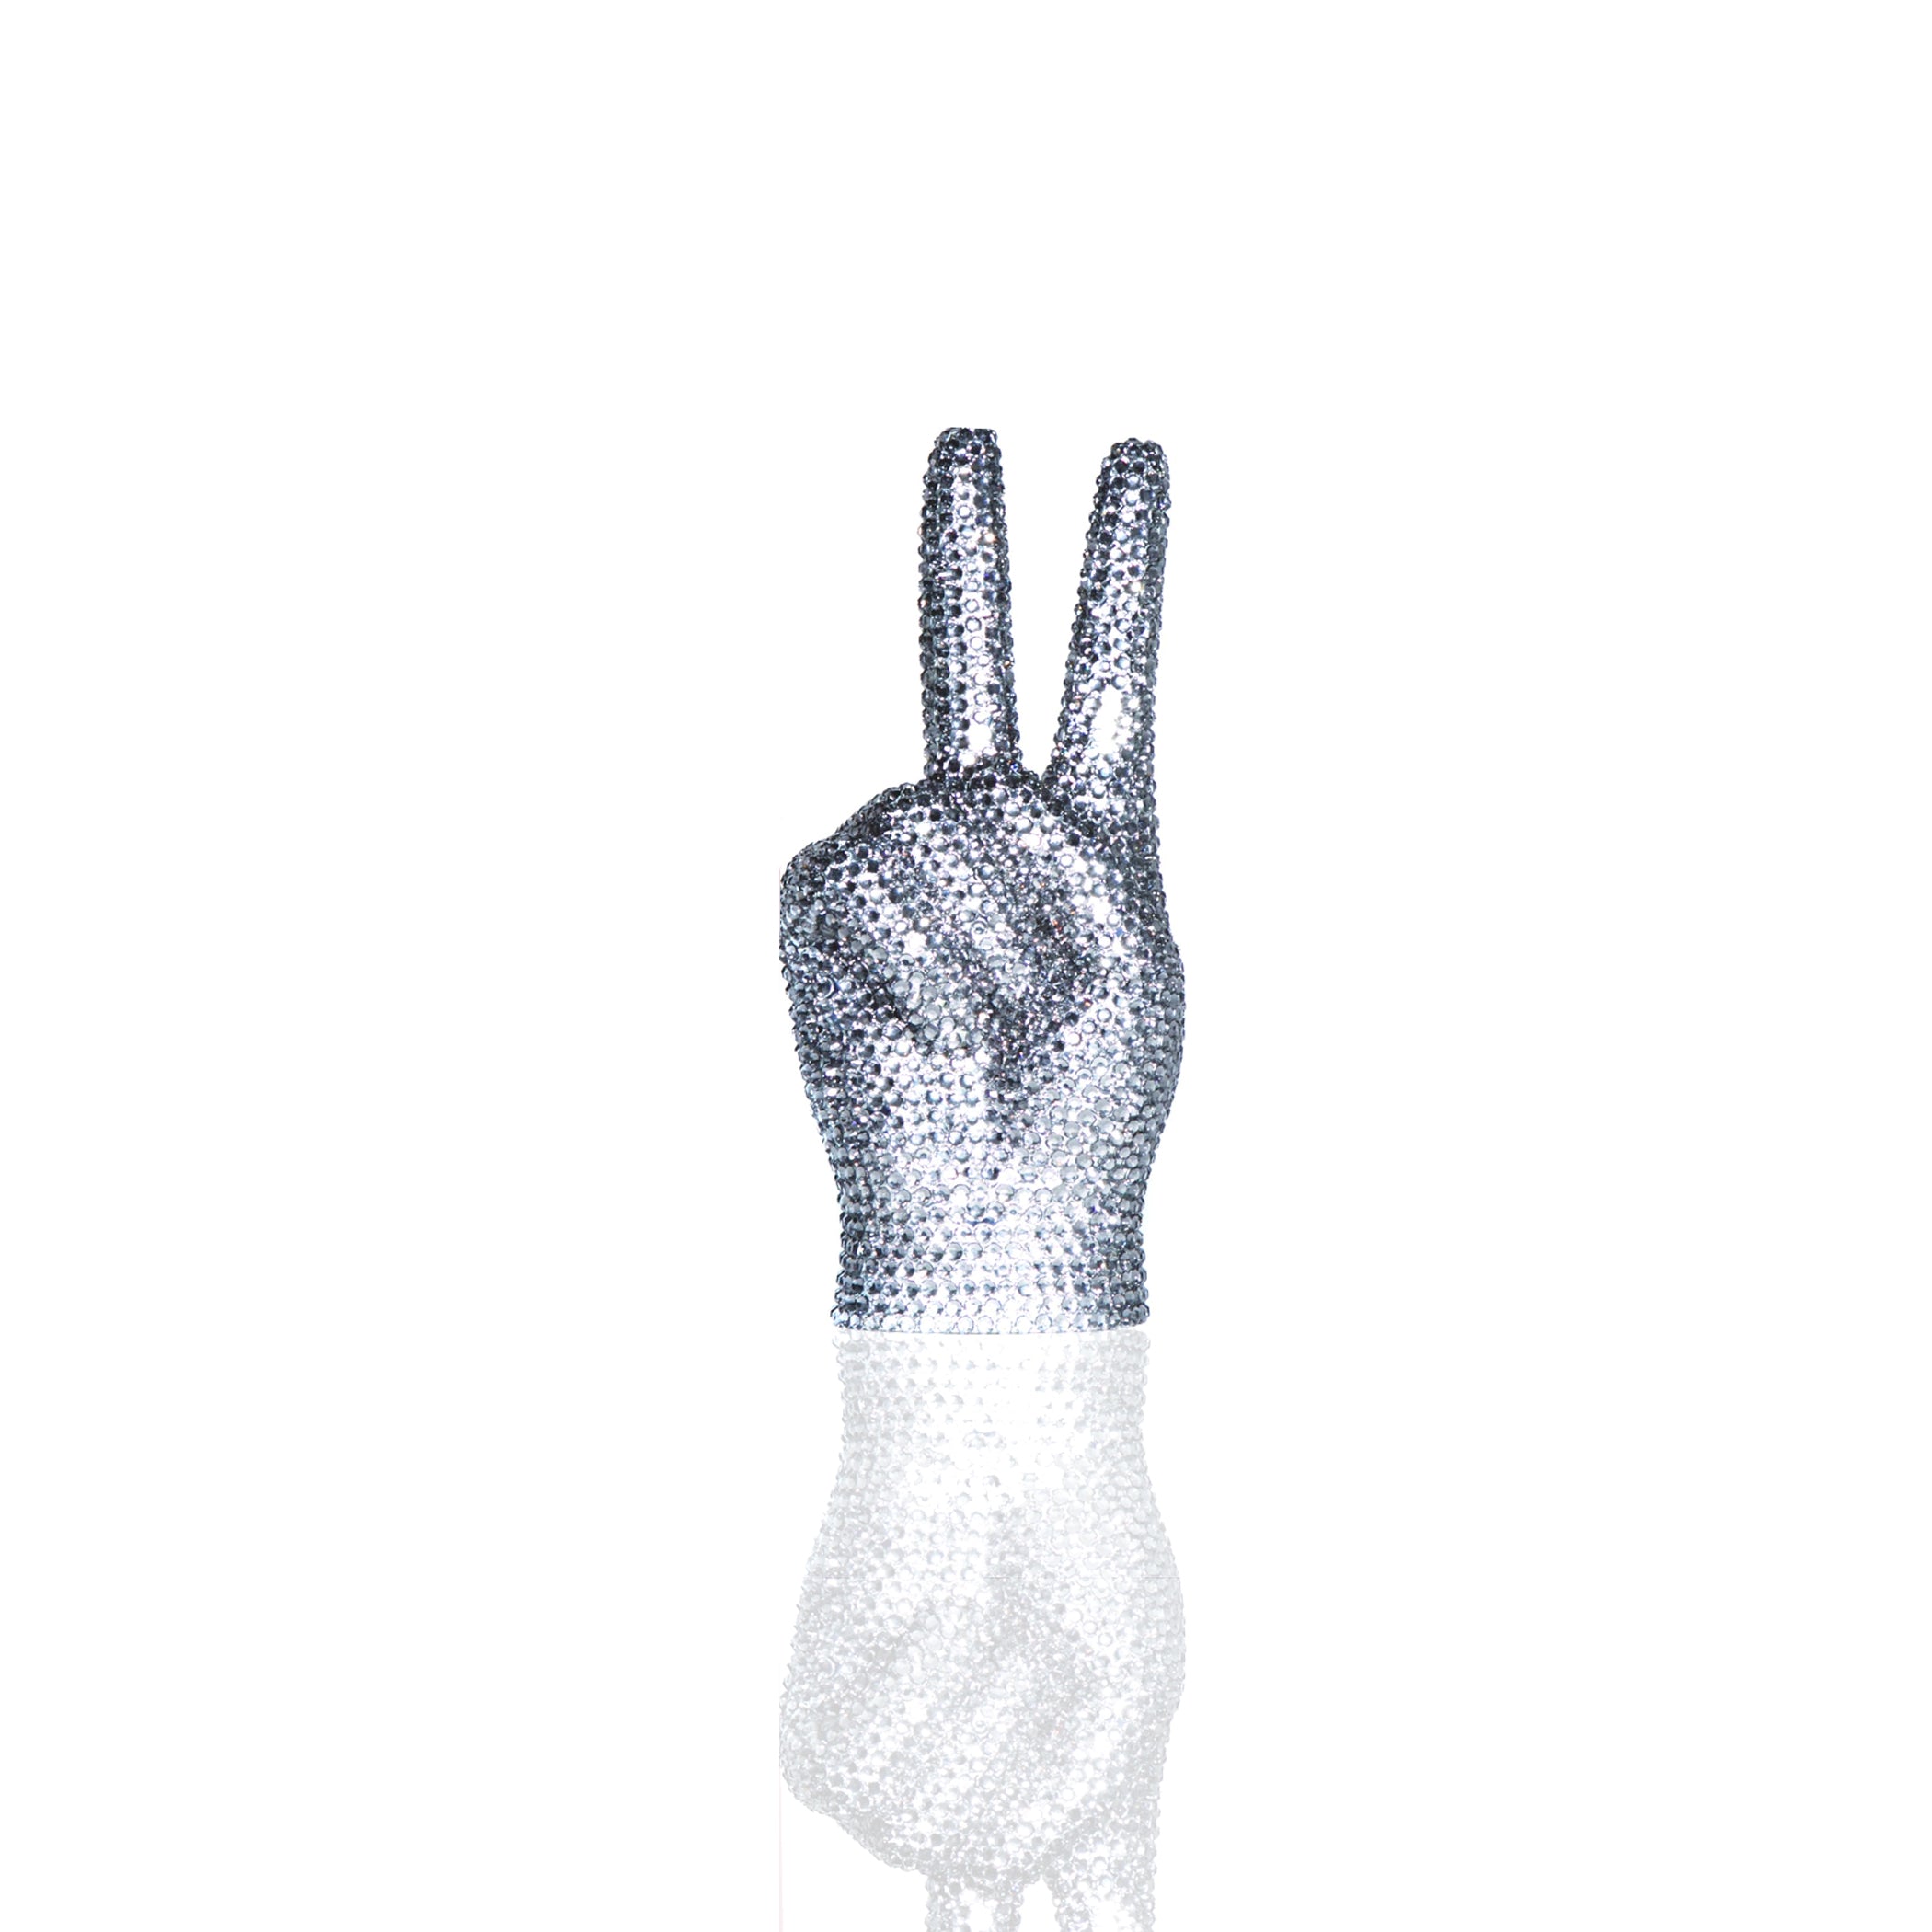 Peace sign hand sculpture